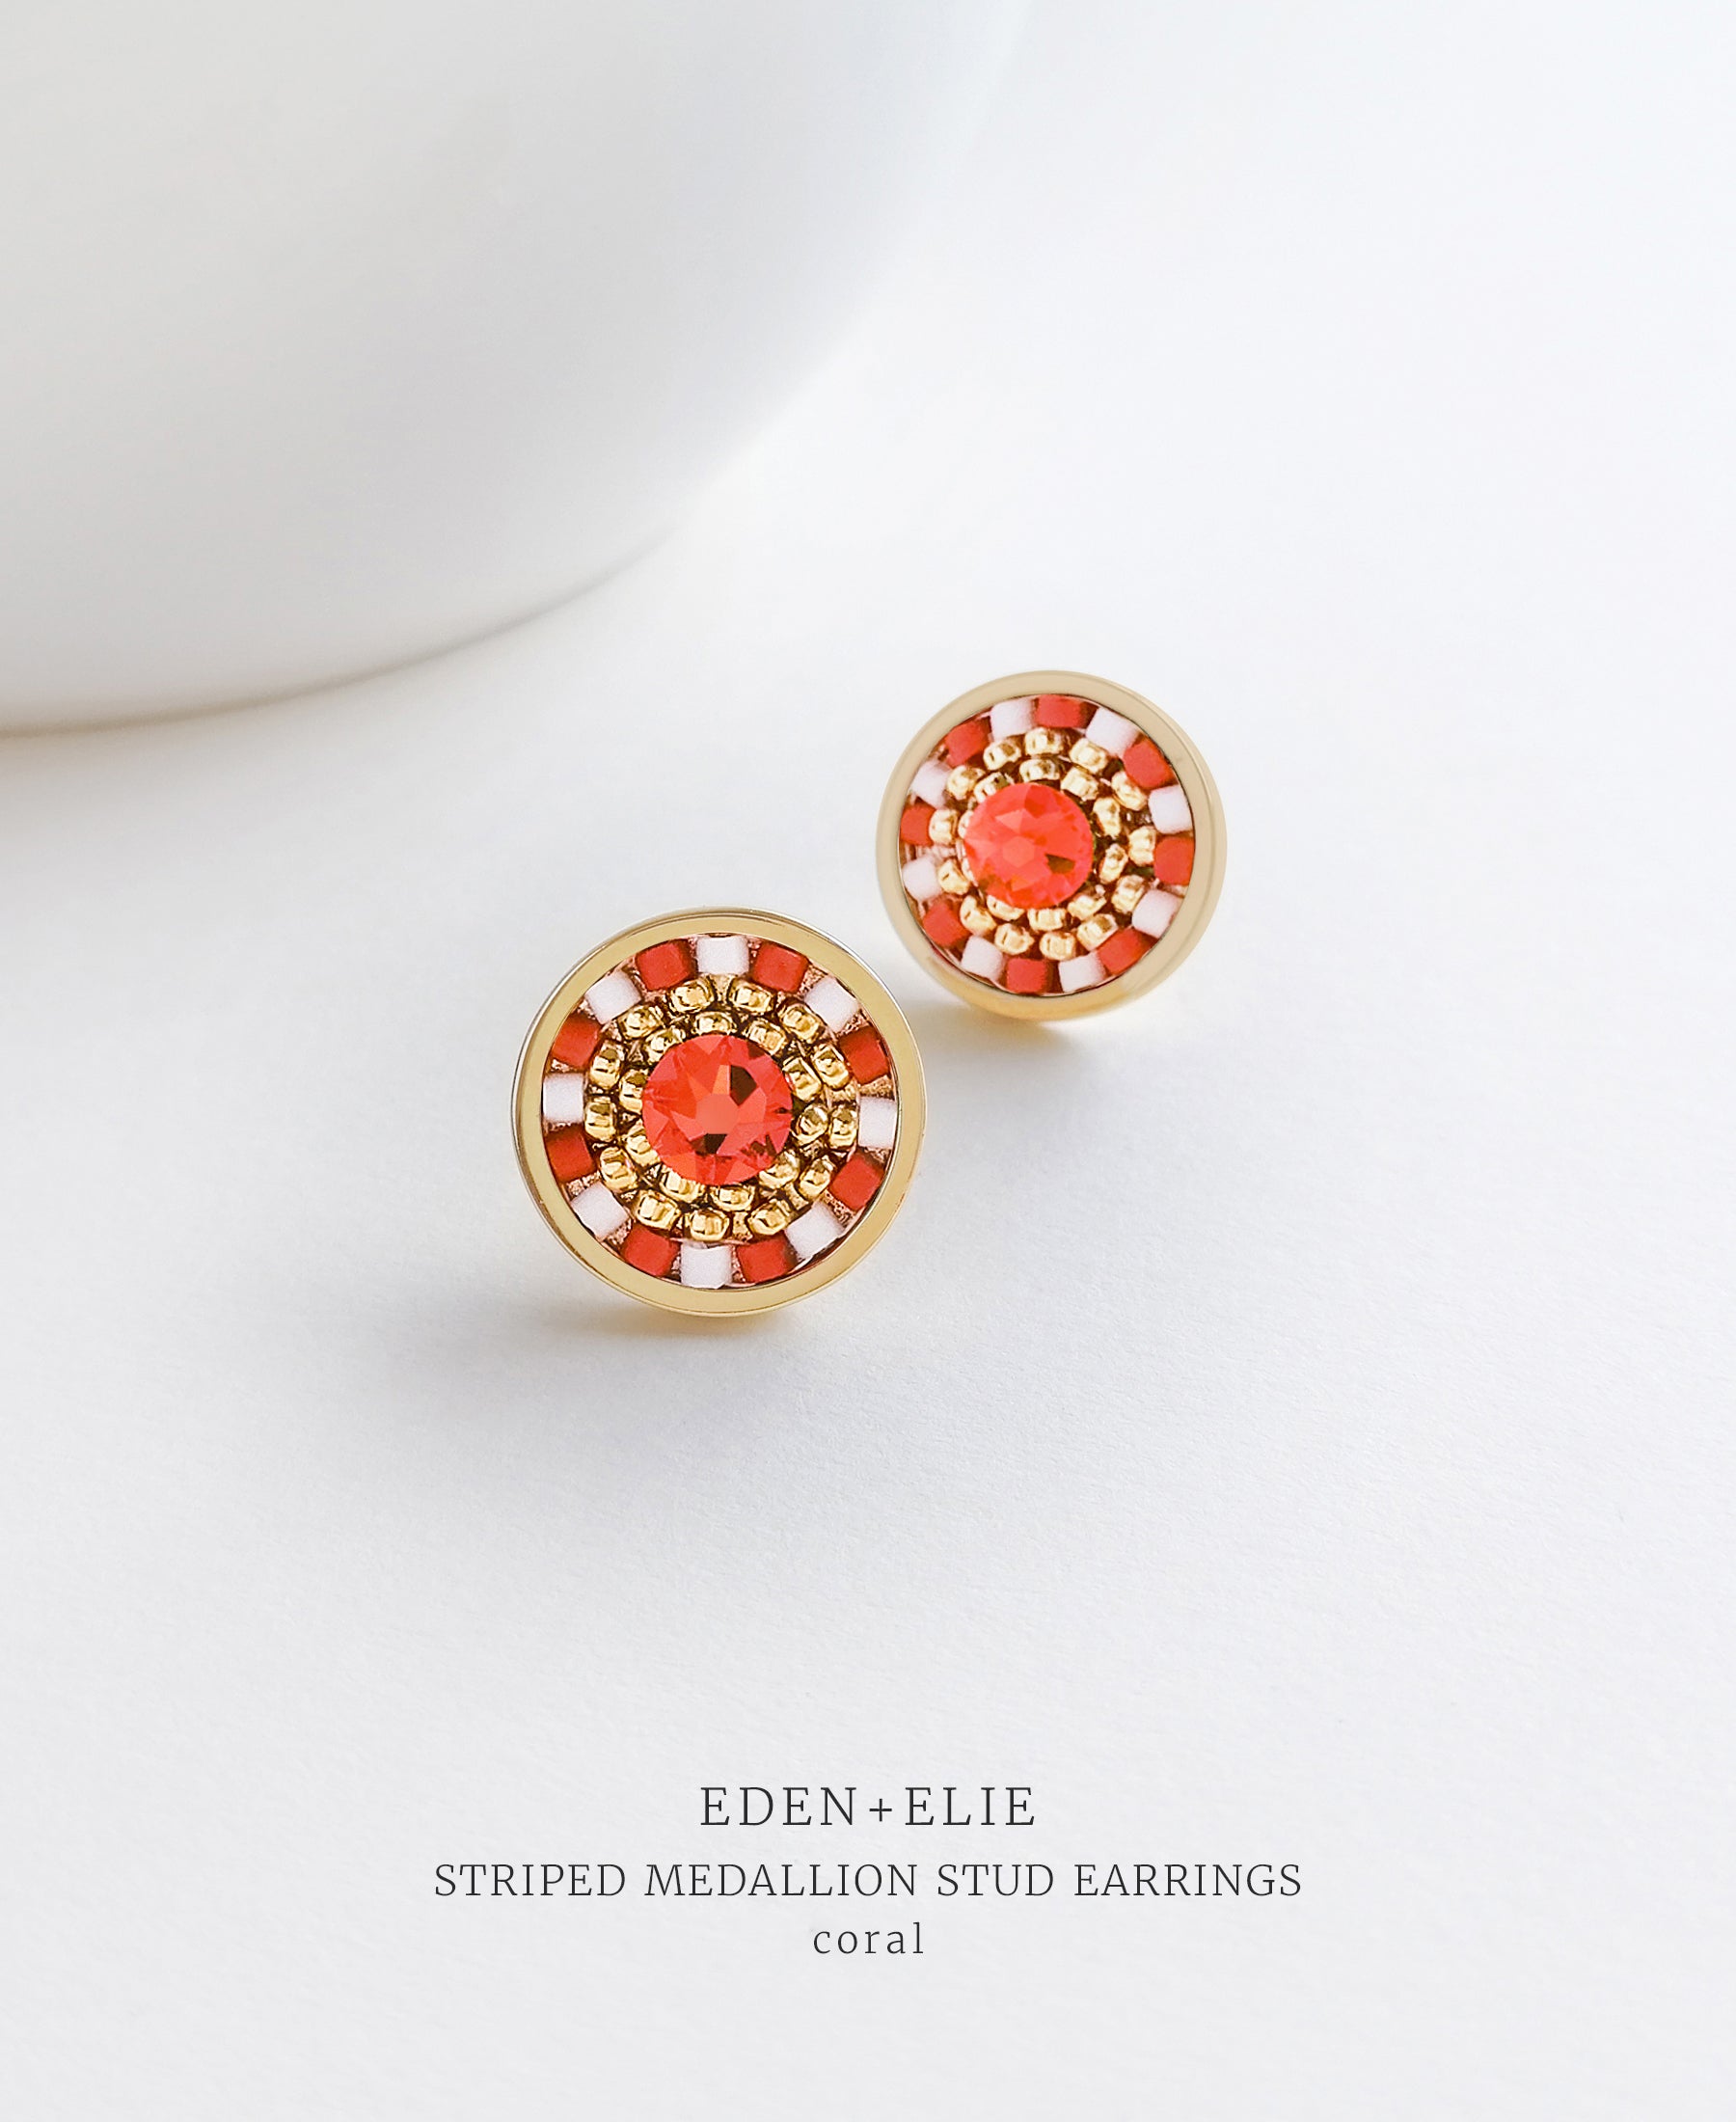 EDEN + ELIE Striped Medallion stud earrings - coral